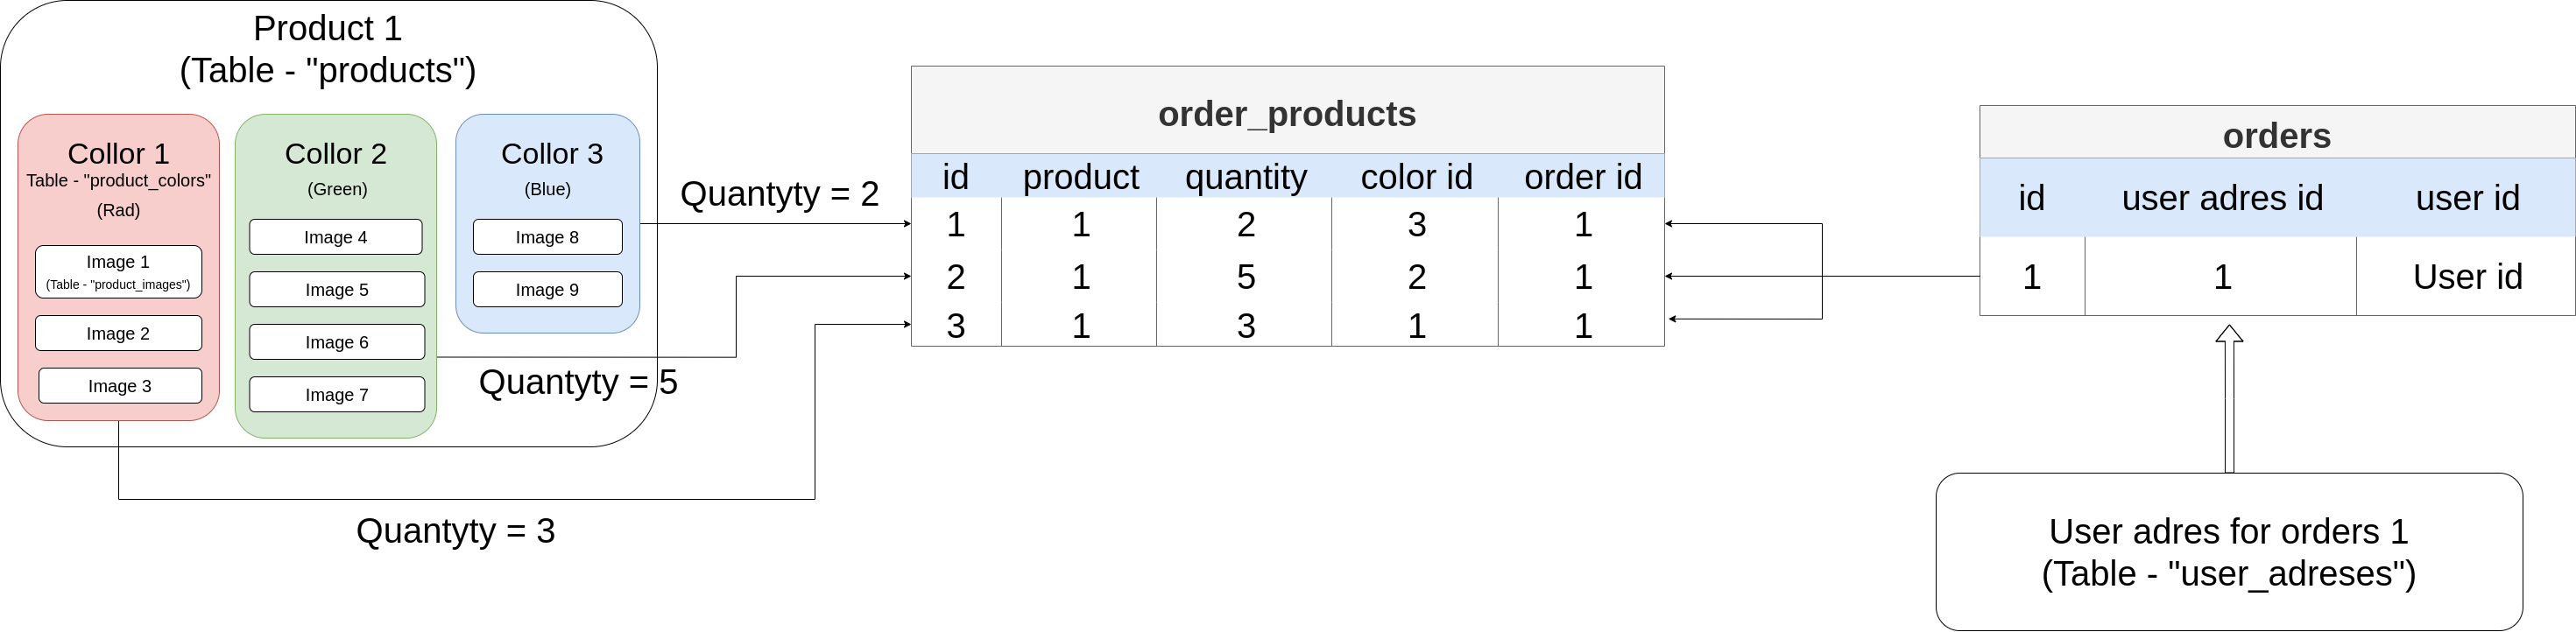 Product order structur diagram